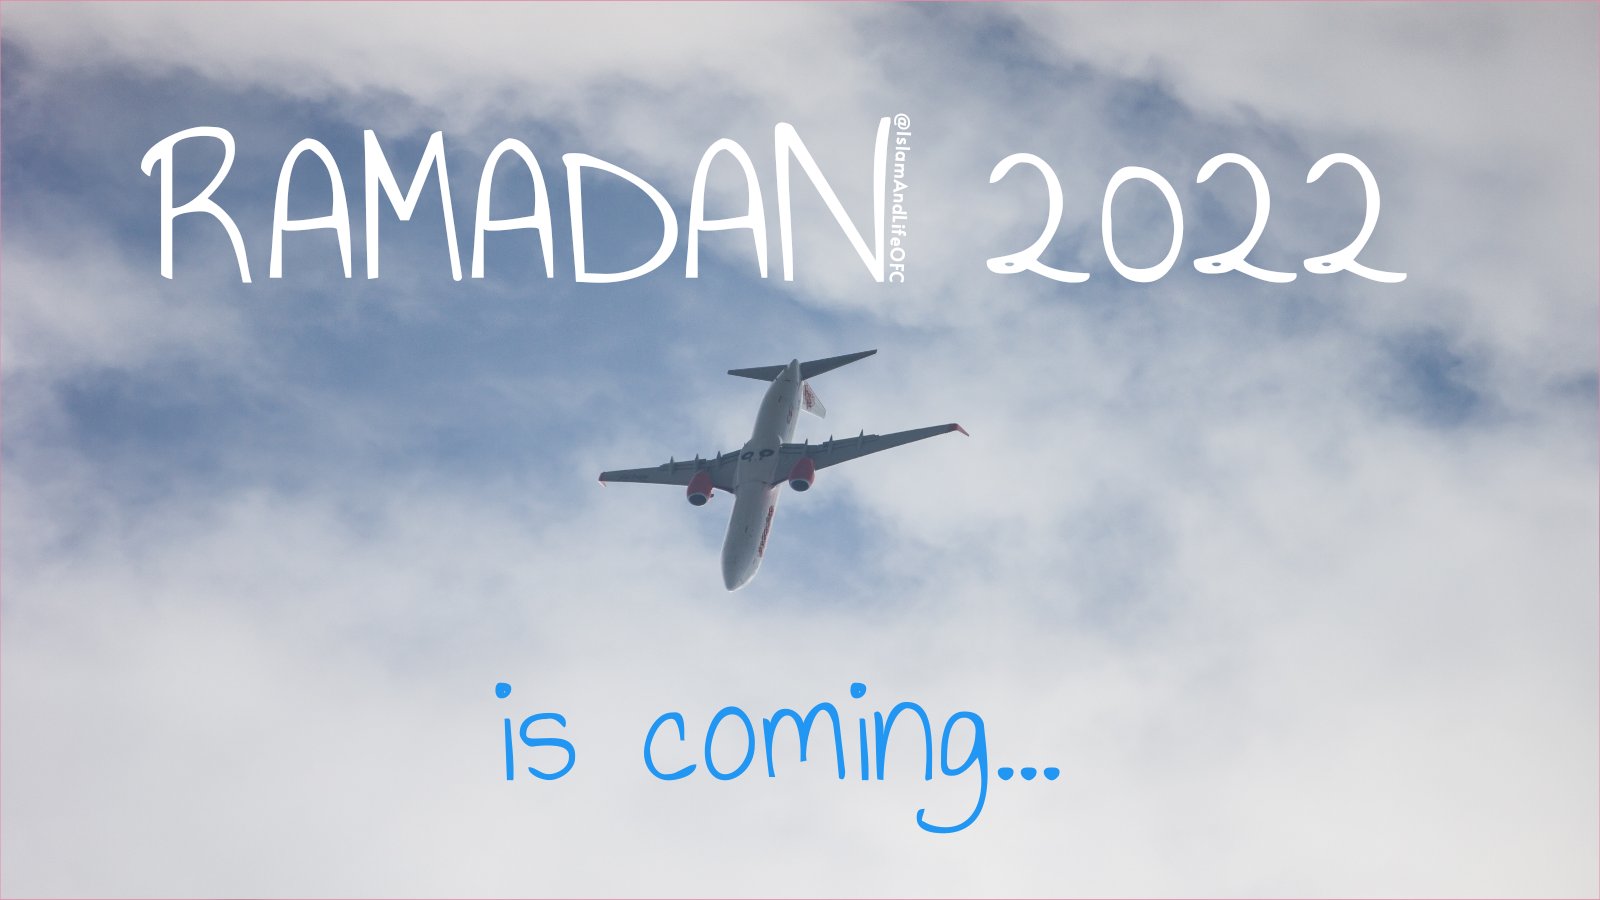 How many day until ramadan 2022